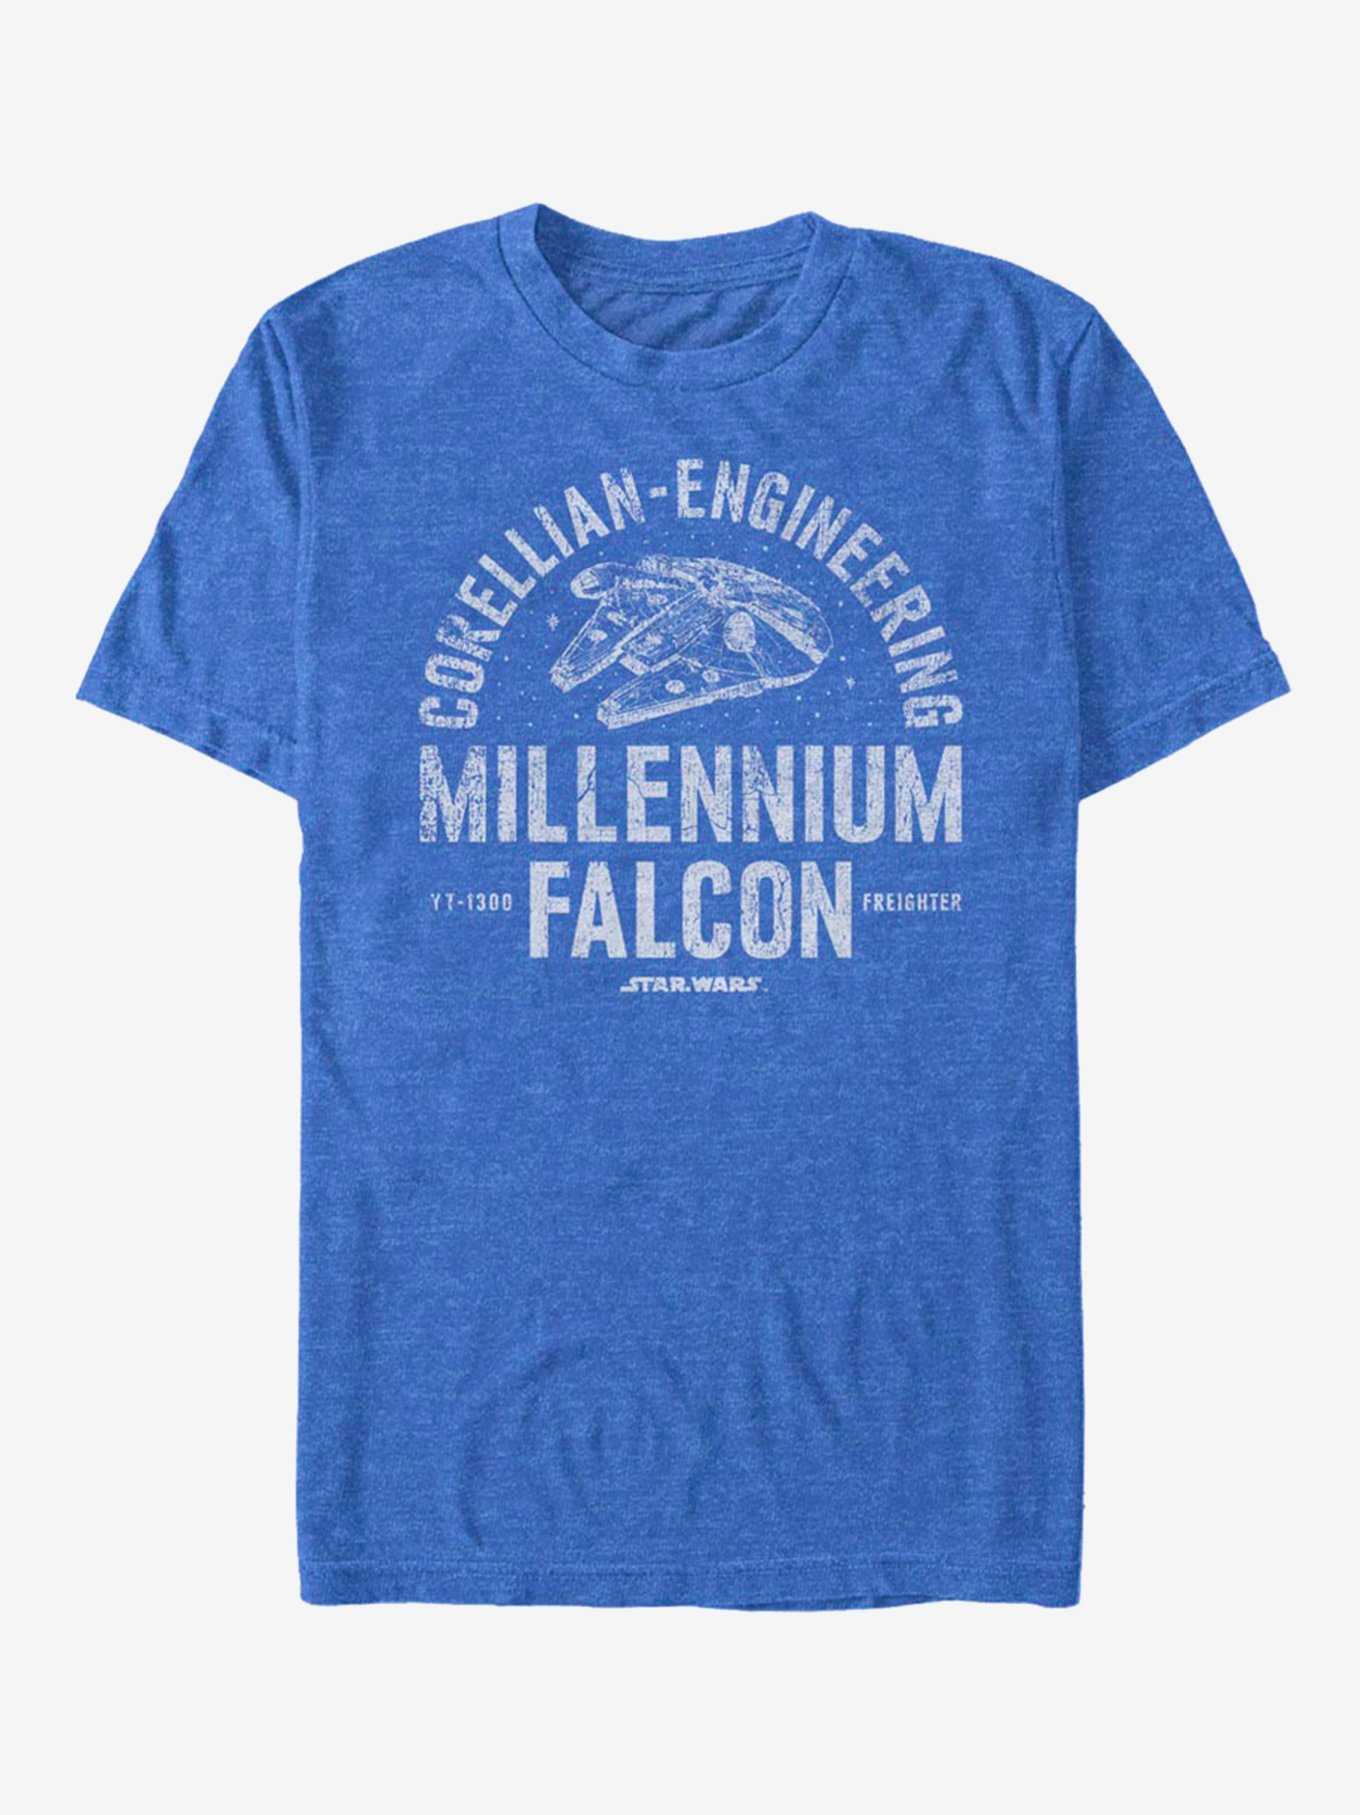 Star Wars Falcon Corellian Freighter T-Shirt, , hi-res